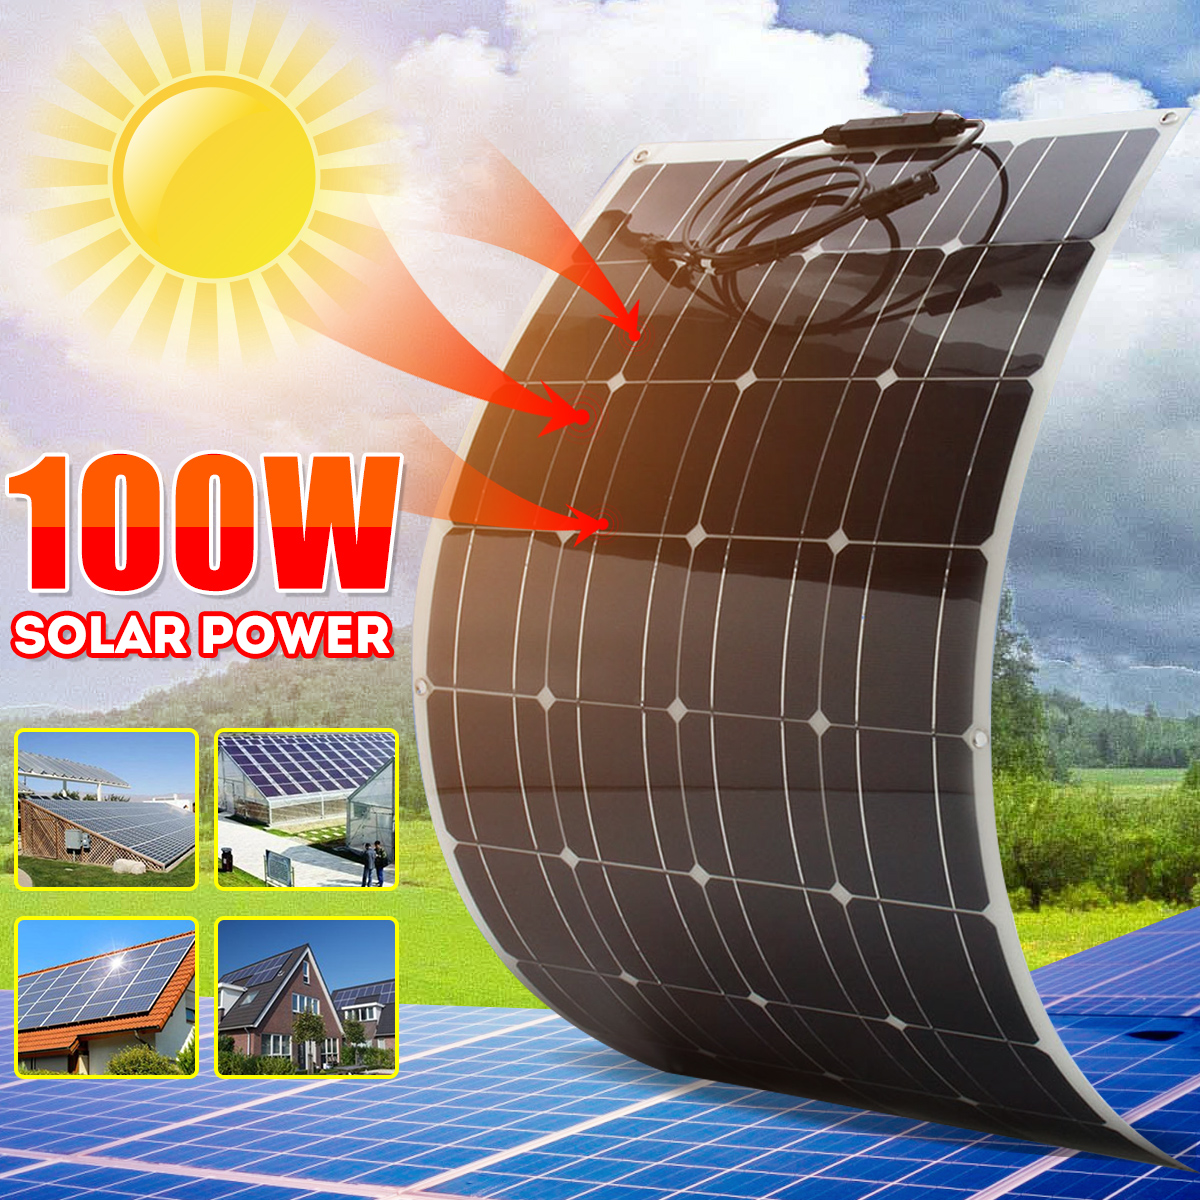 100W-18V-Solar-Panel-l-15m-Cable-5400Pa-Pressure-Mono-crystalline-Semi-flexible-Panel--Power-Bank-1786461-1